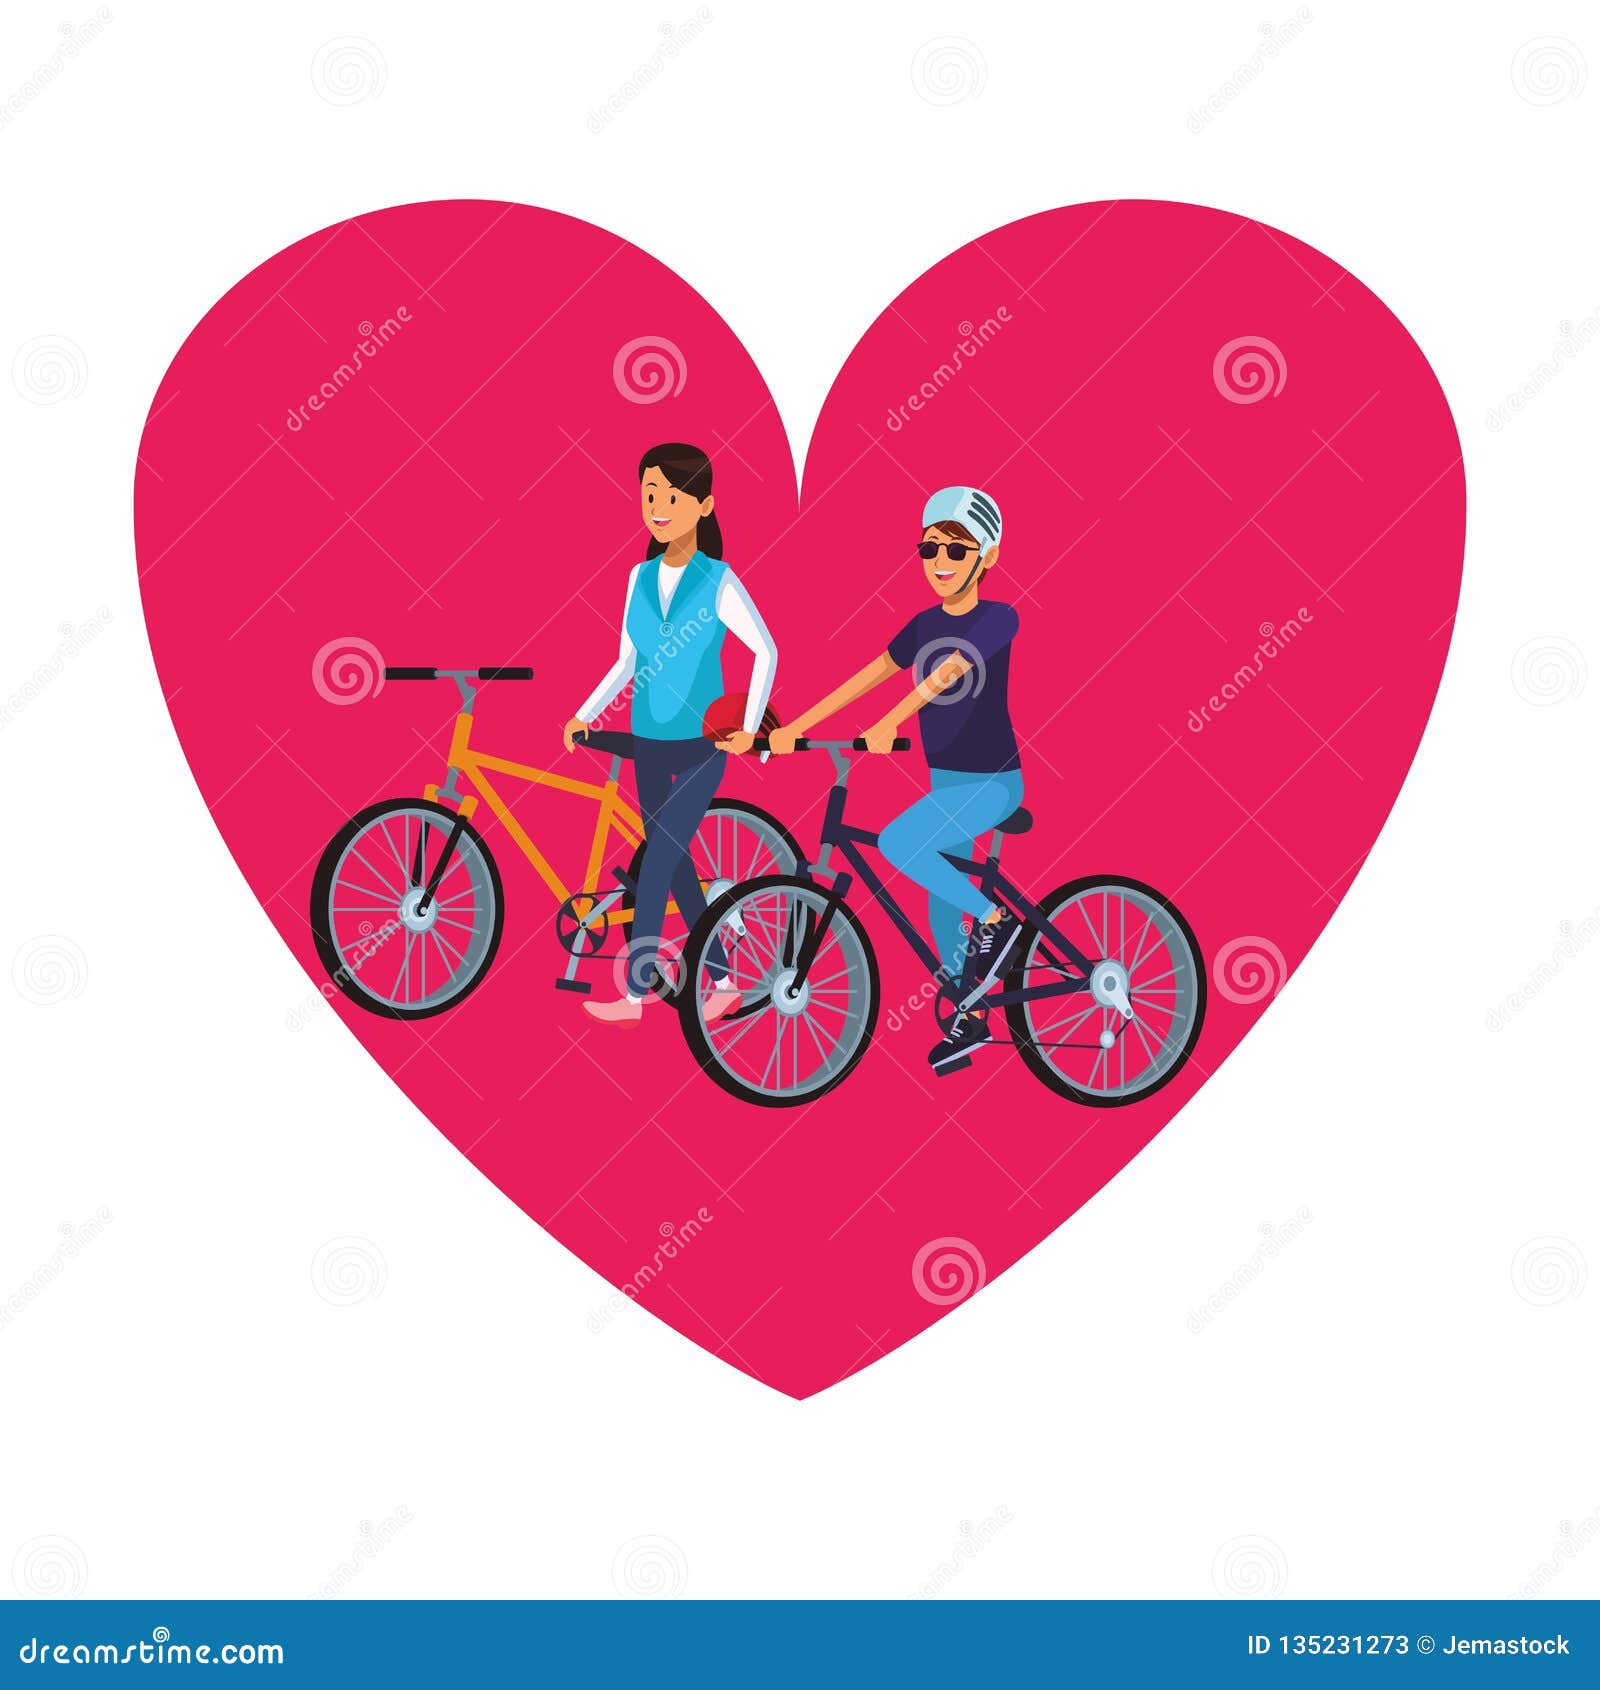 couple riding bicicle heart icon